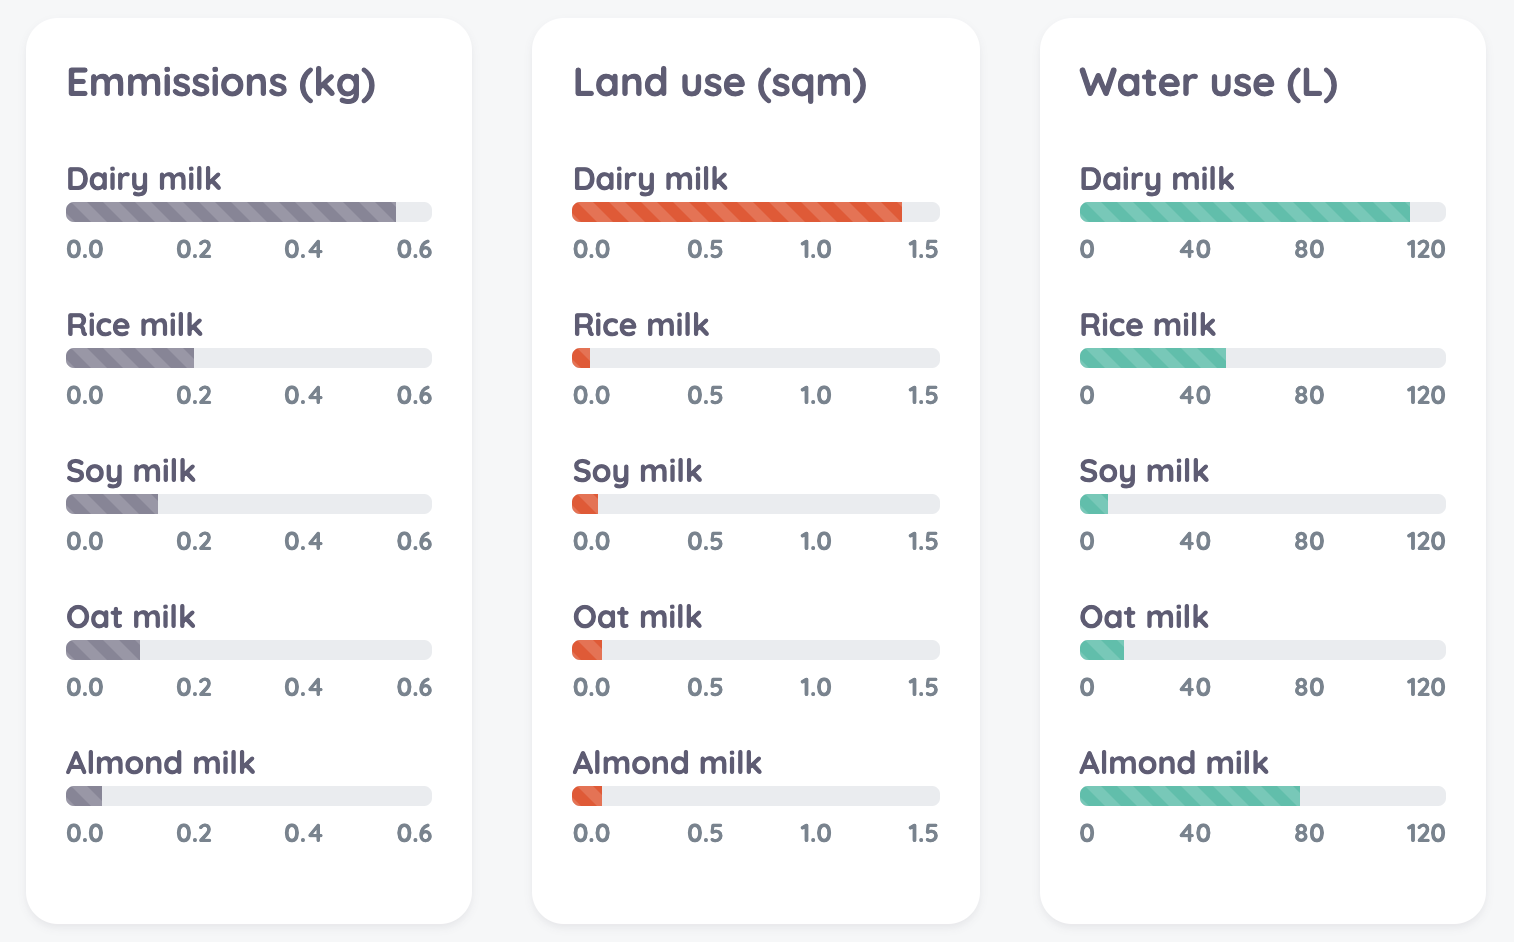 Milk Emissions, Land Use, Water Use